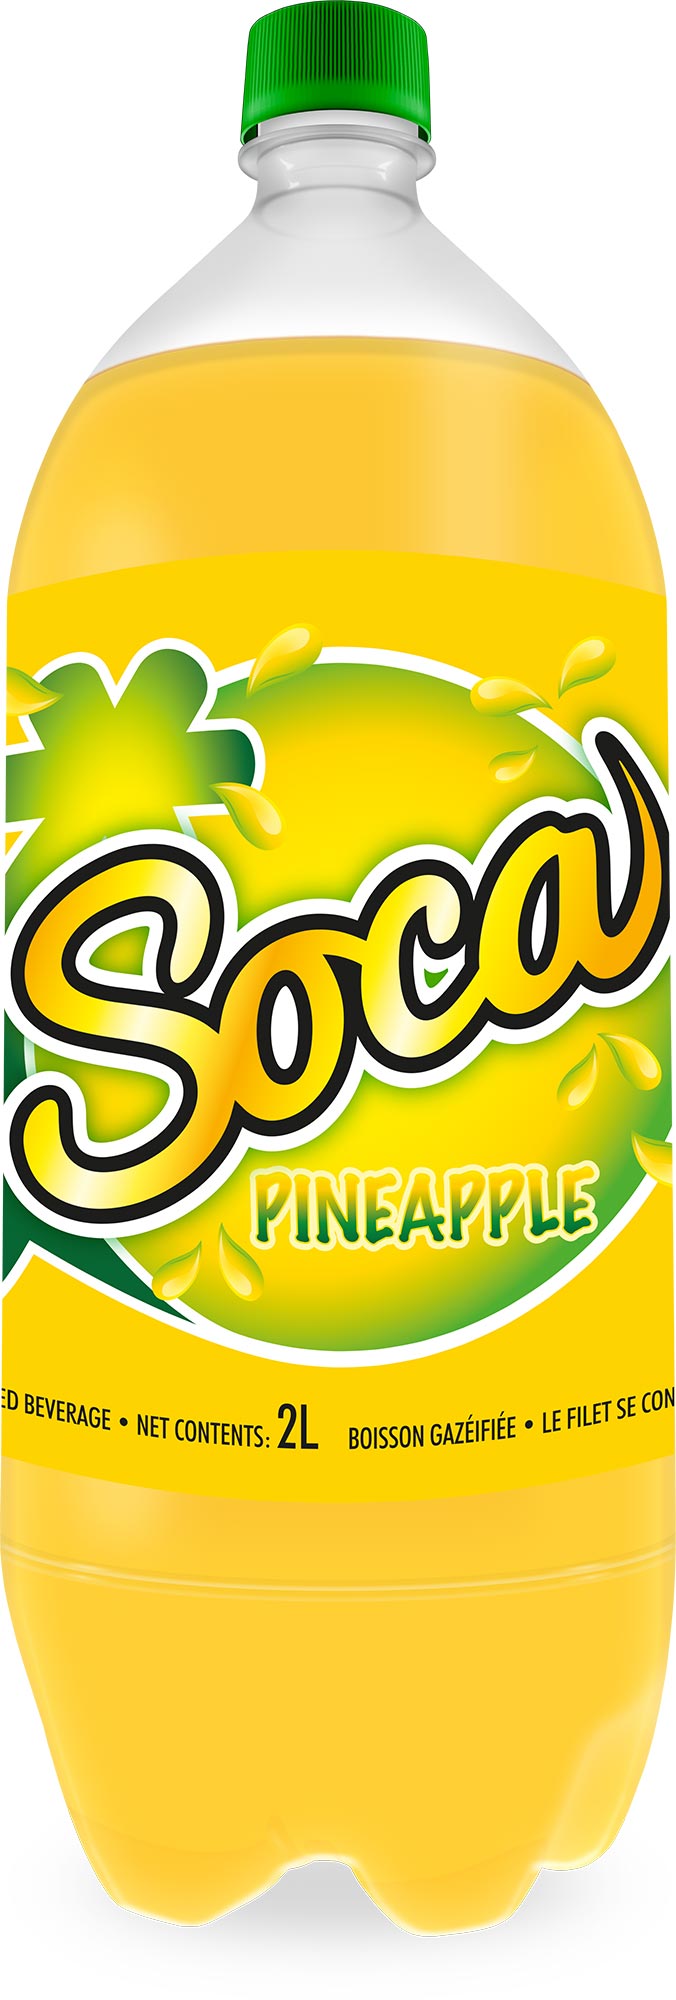 Soca Pineapple